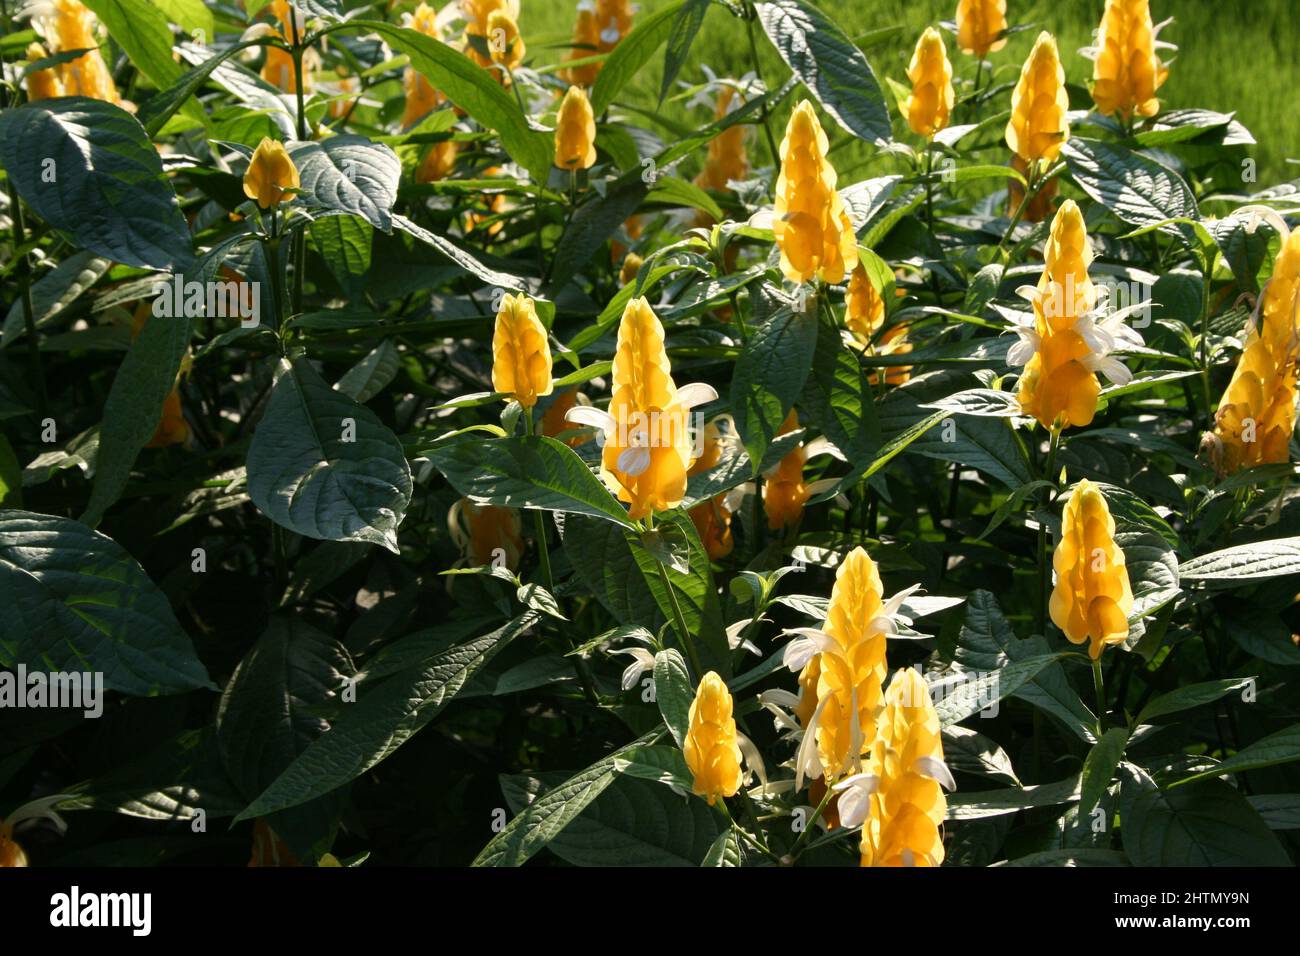 GARDEN BED OF LOLLIPOP FLOWERS (PACHYSTACHYS LUTEA) ALSO KNOWN AS GOLDEN SHRIMP PLANT. Stock Photo